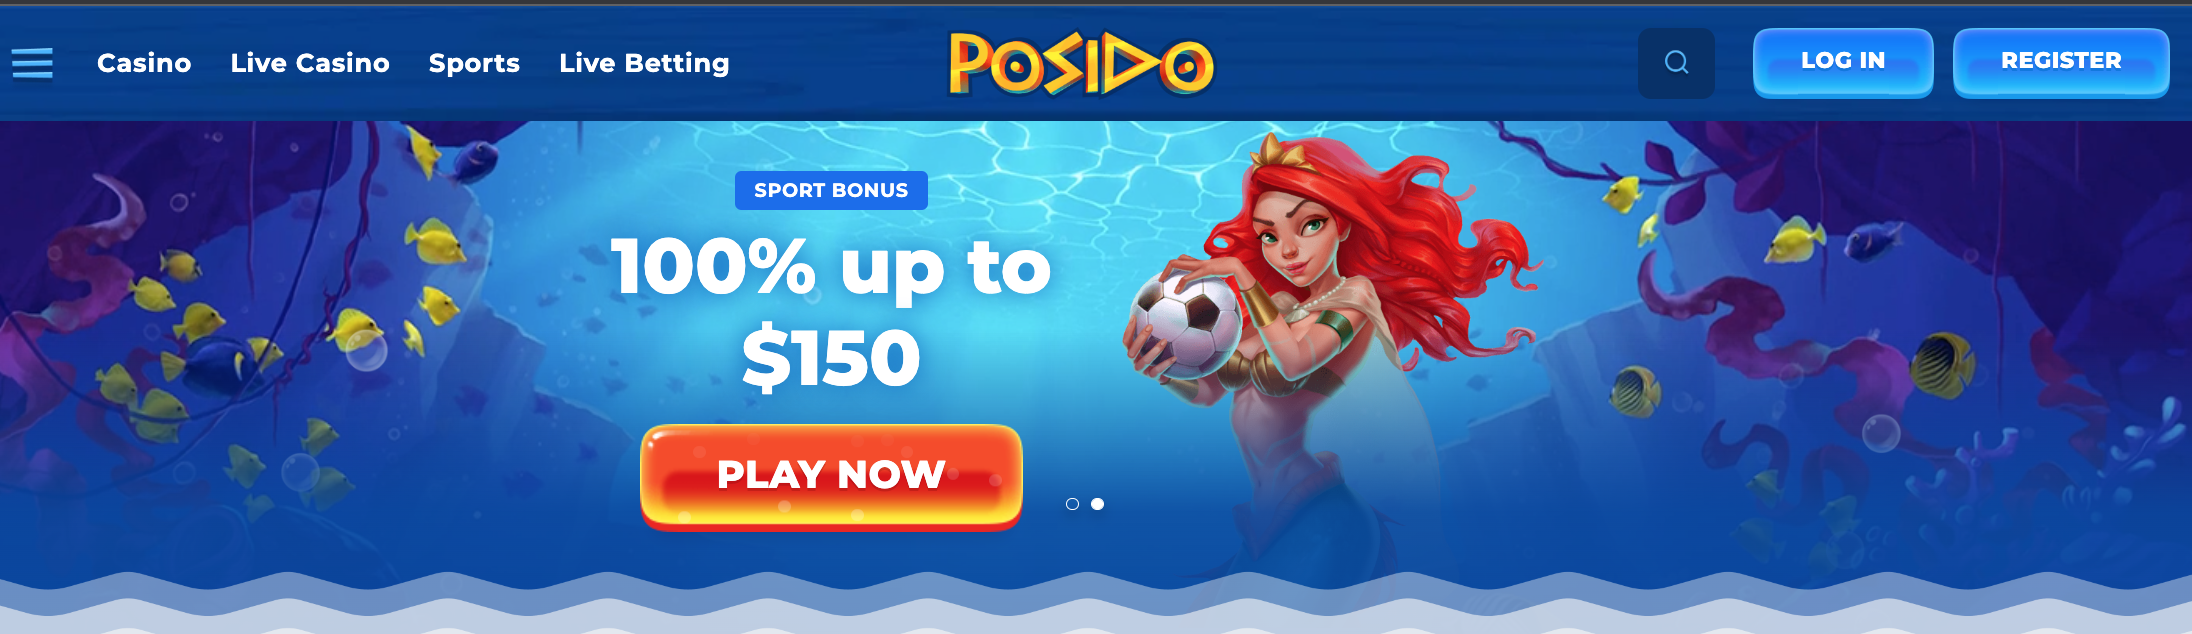 posidor-казино-сайт